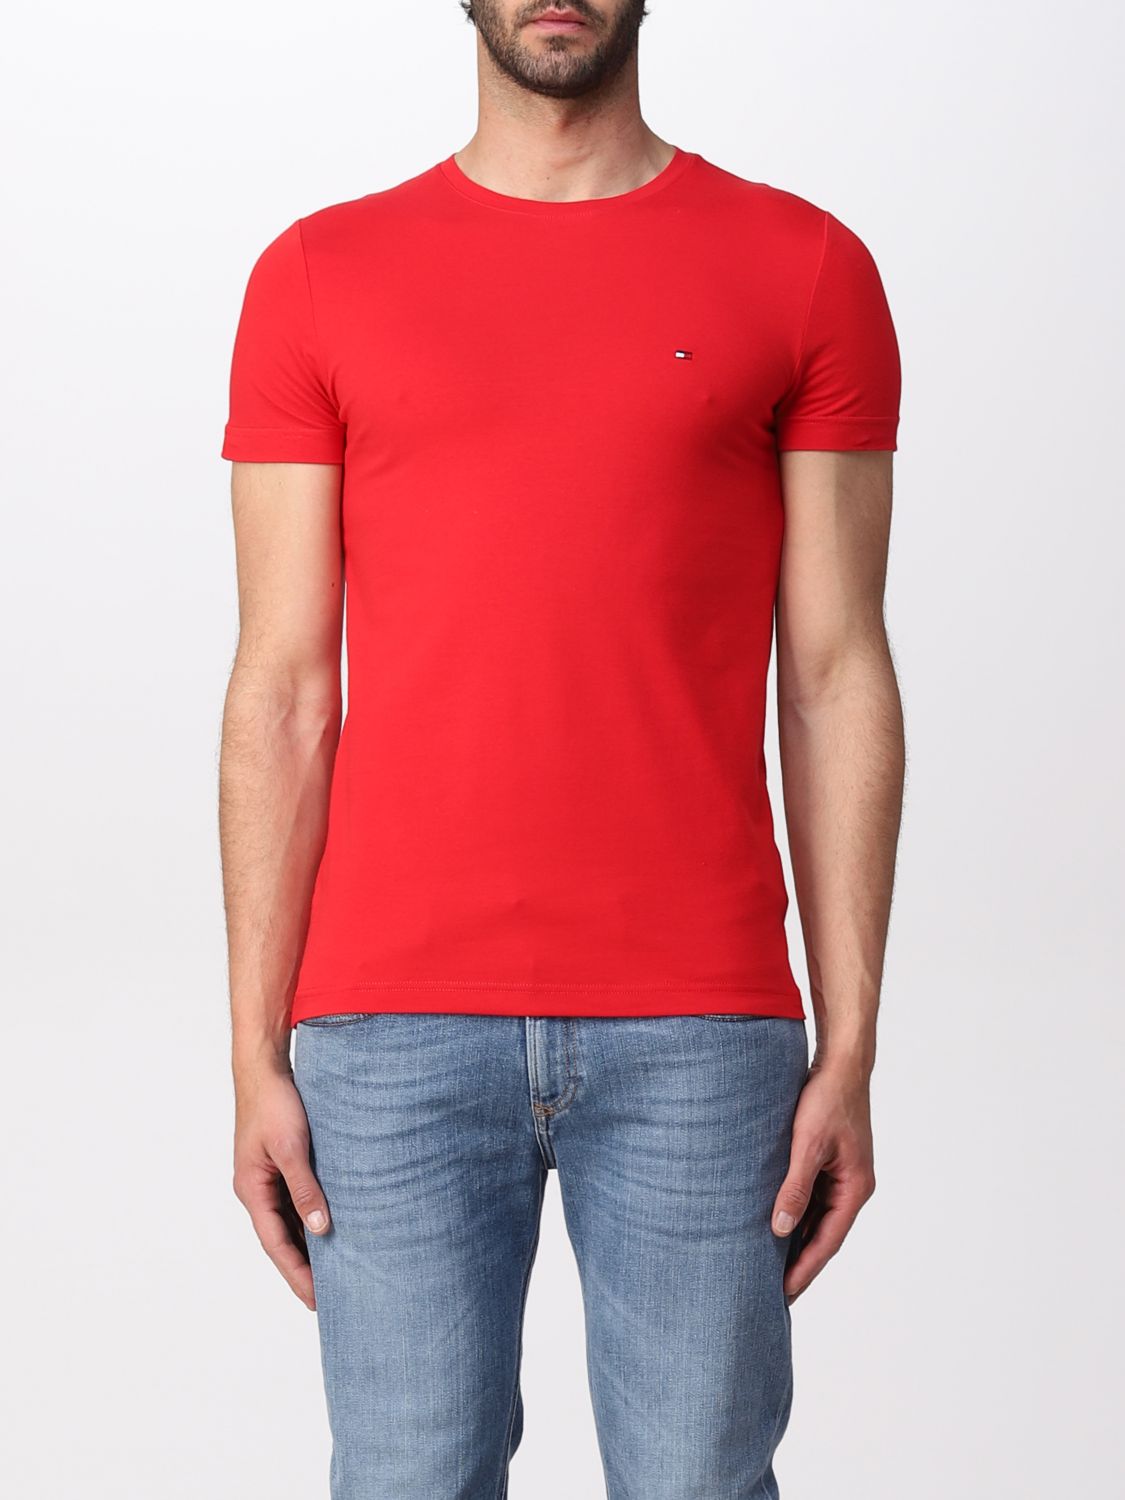 Arthur Diverse Betrouwbaar Tommy Hilfiger Outlet: T-shirt men - Red | Tommy Hilfiger t-shirt  MW0MW10800 online on GIGLIO.COM